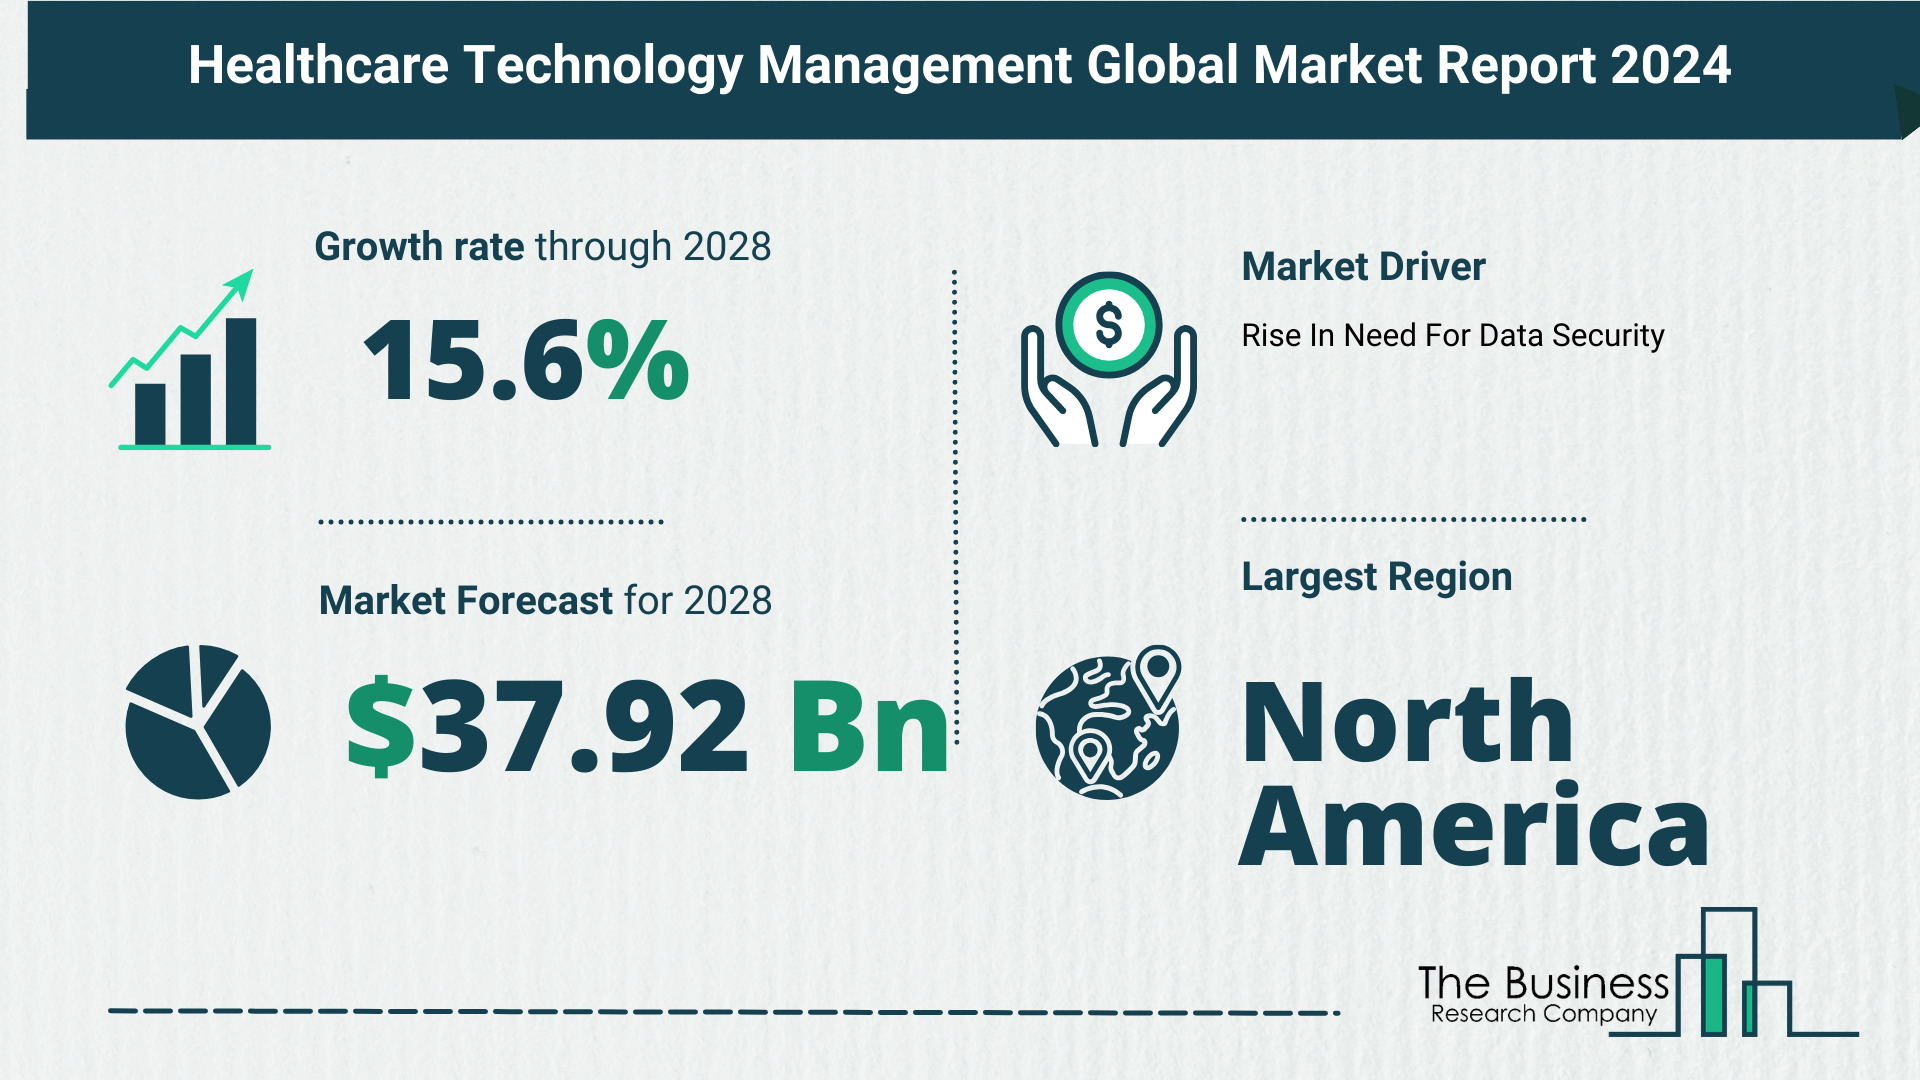 Global Healthcare Technology Management Market